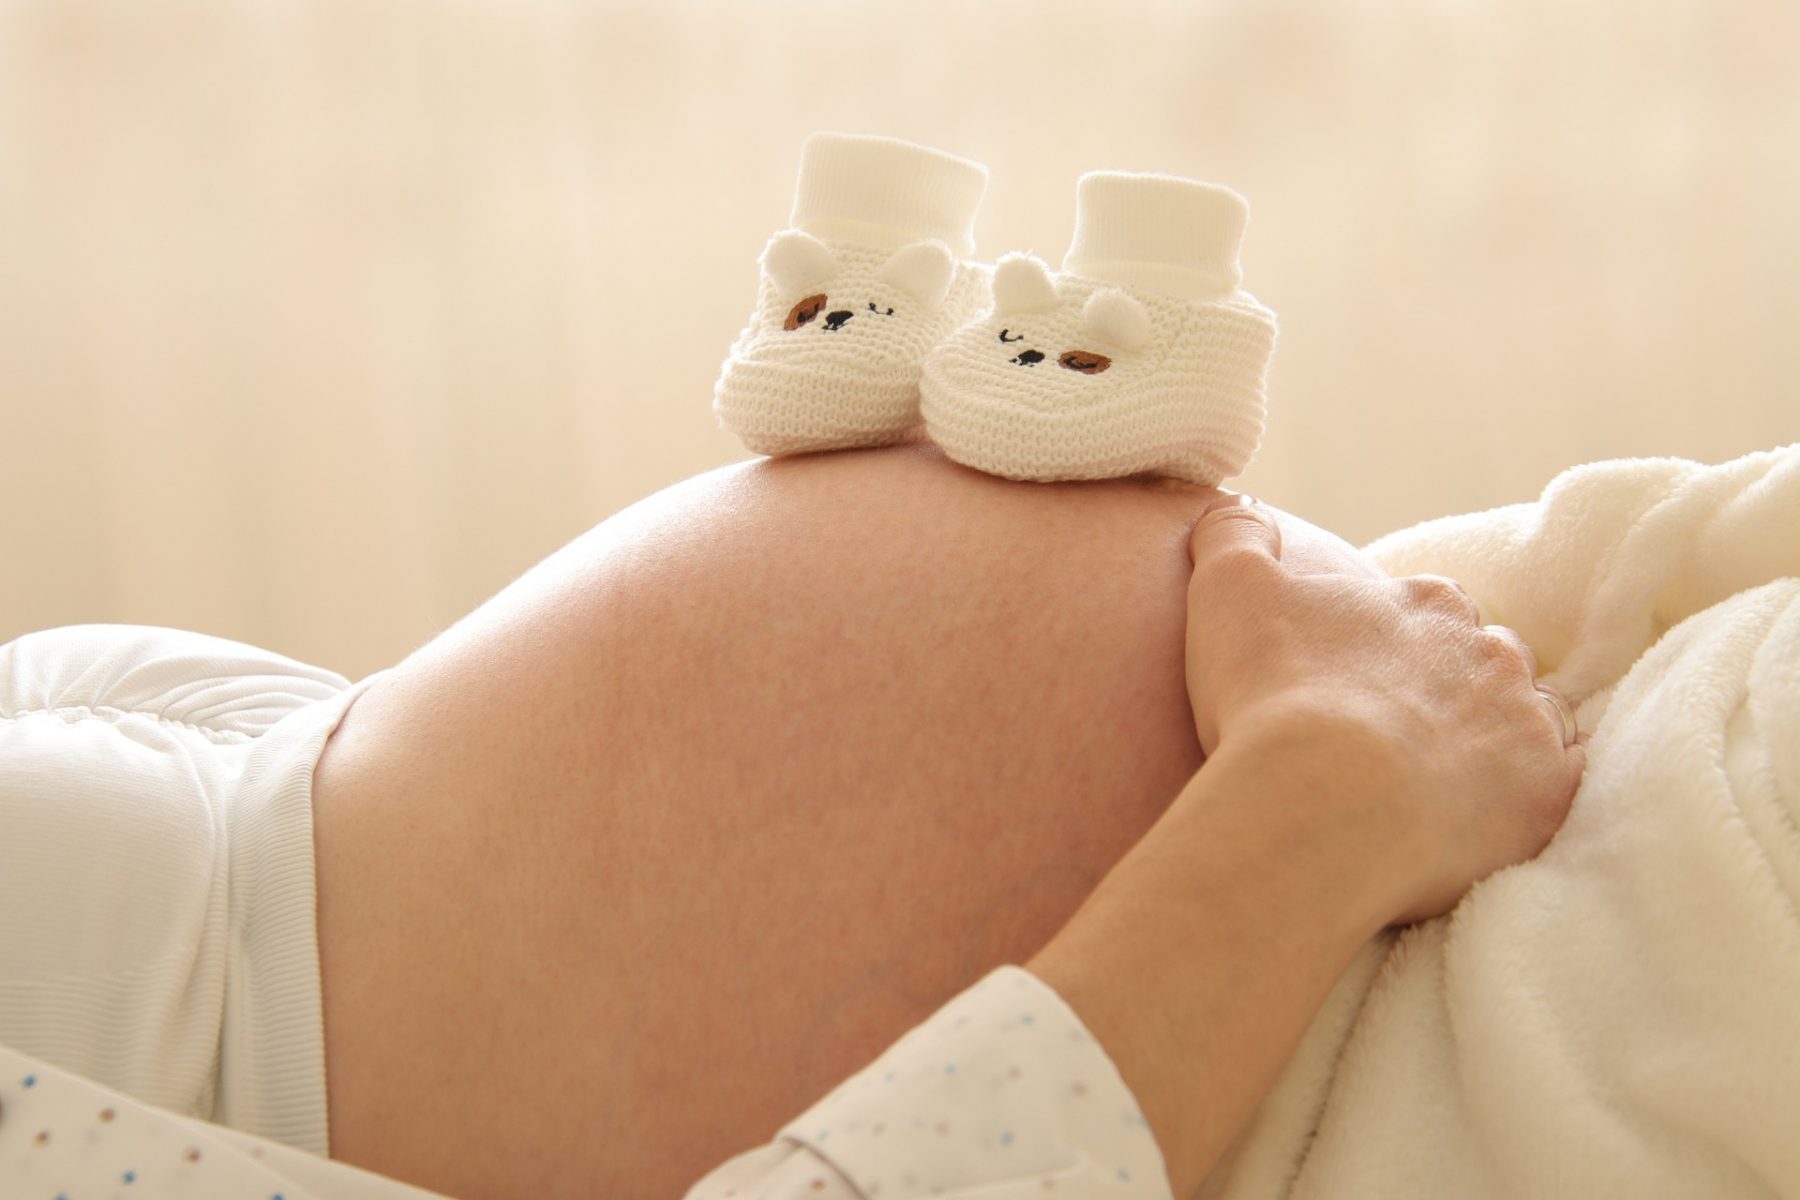 Eγκυμοσύνη κοιλιά: Πώς επηρεάζει το έμβρυο η έκθεση στο φως της κοιλιάς της μητέρας;